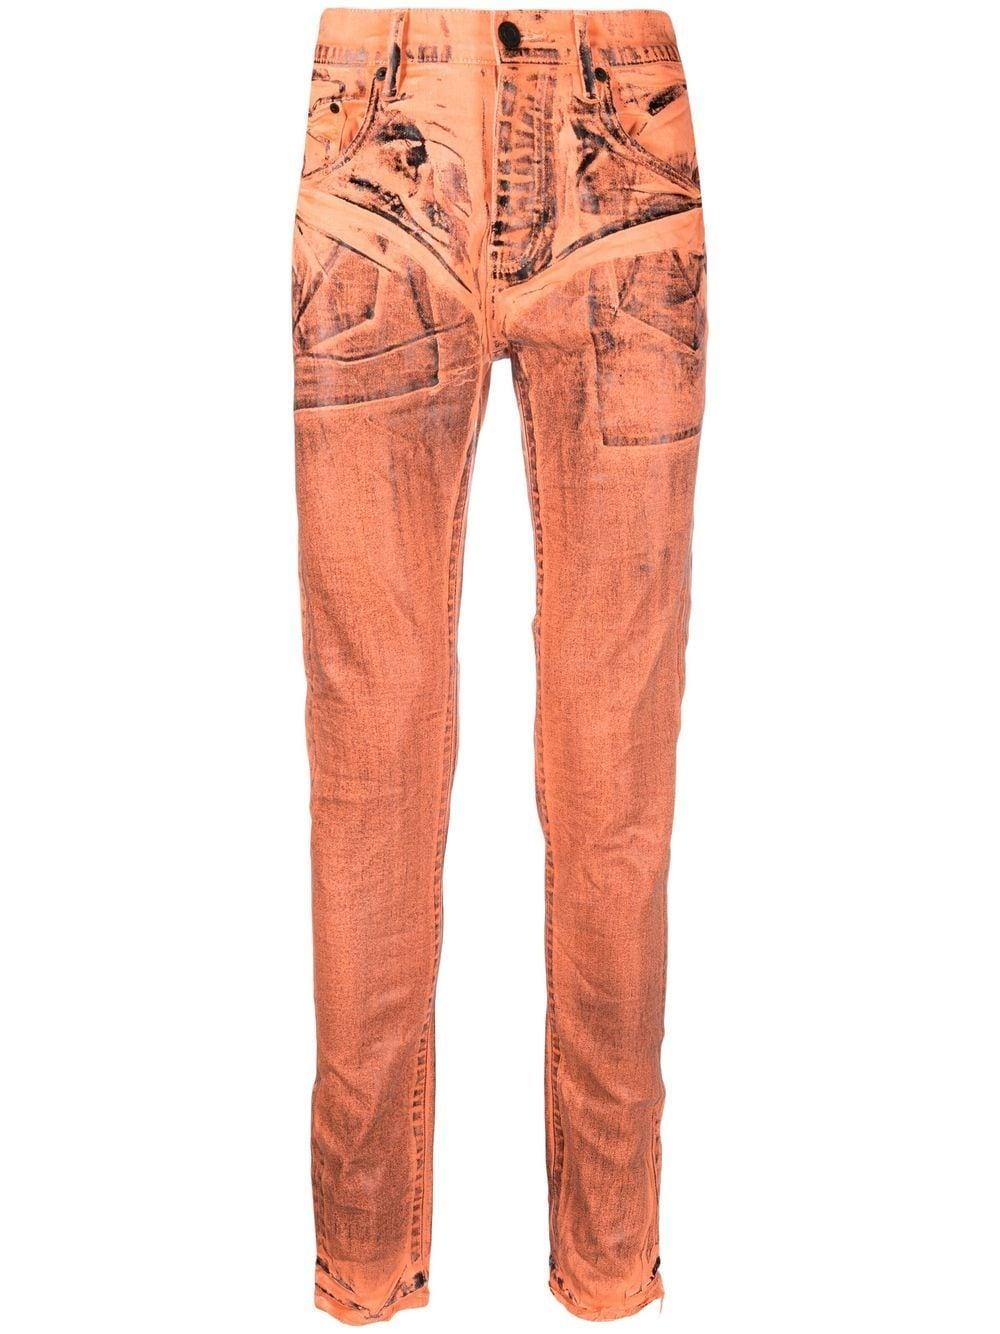 Details more than 154 mens orange denim jeans latest